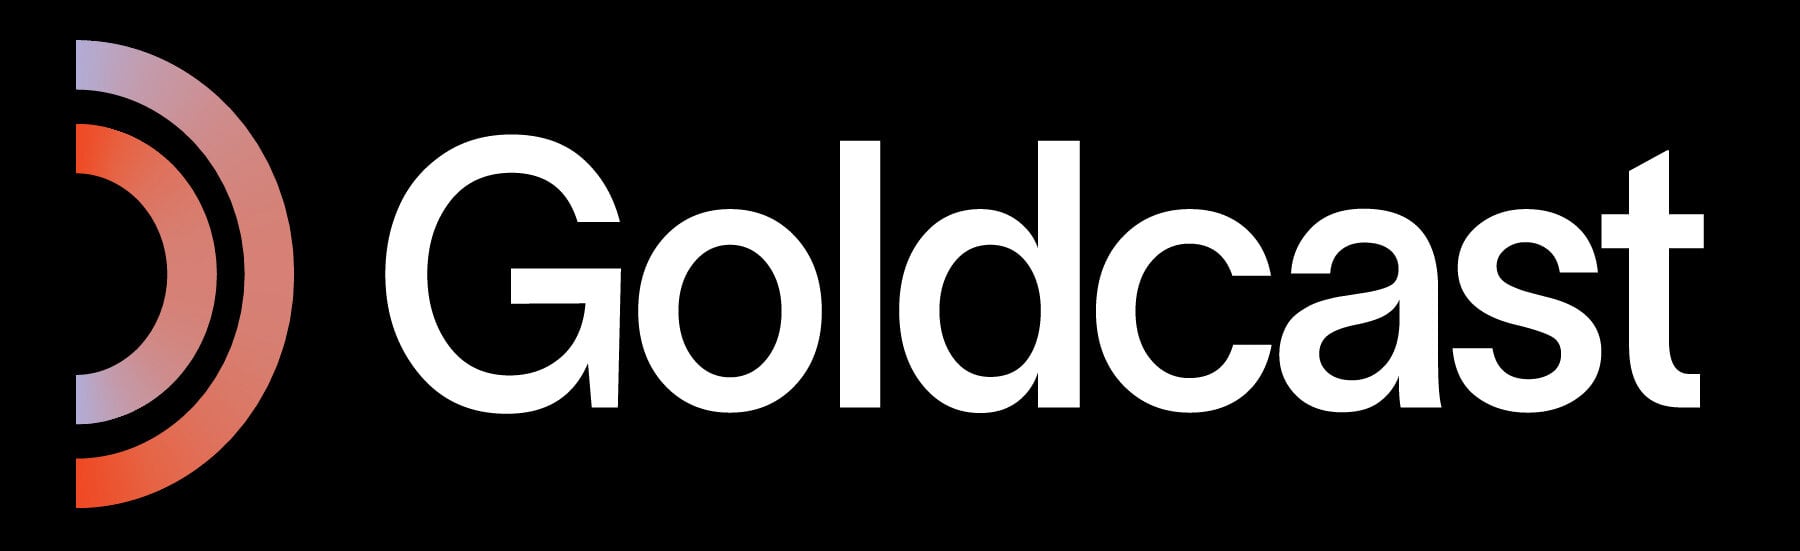 The goldcast logo on a black background.